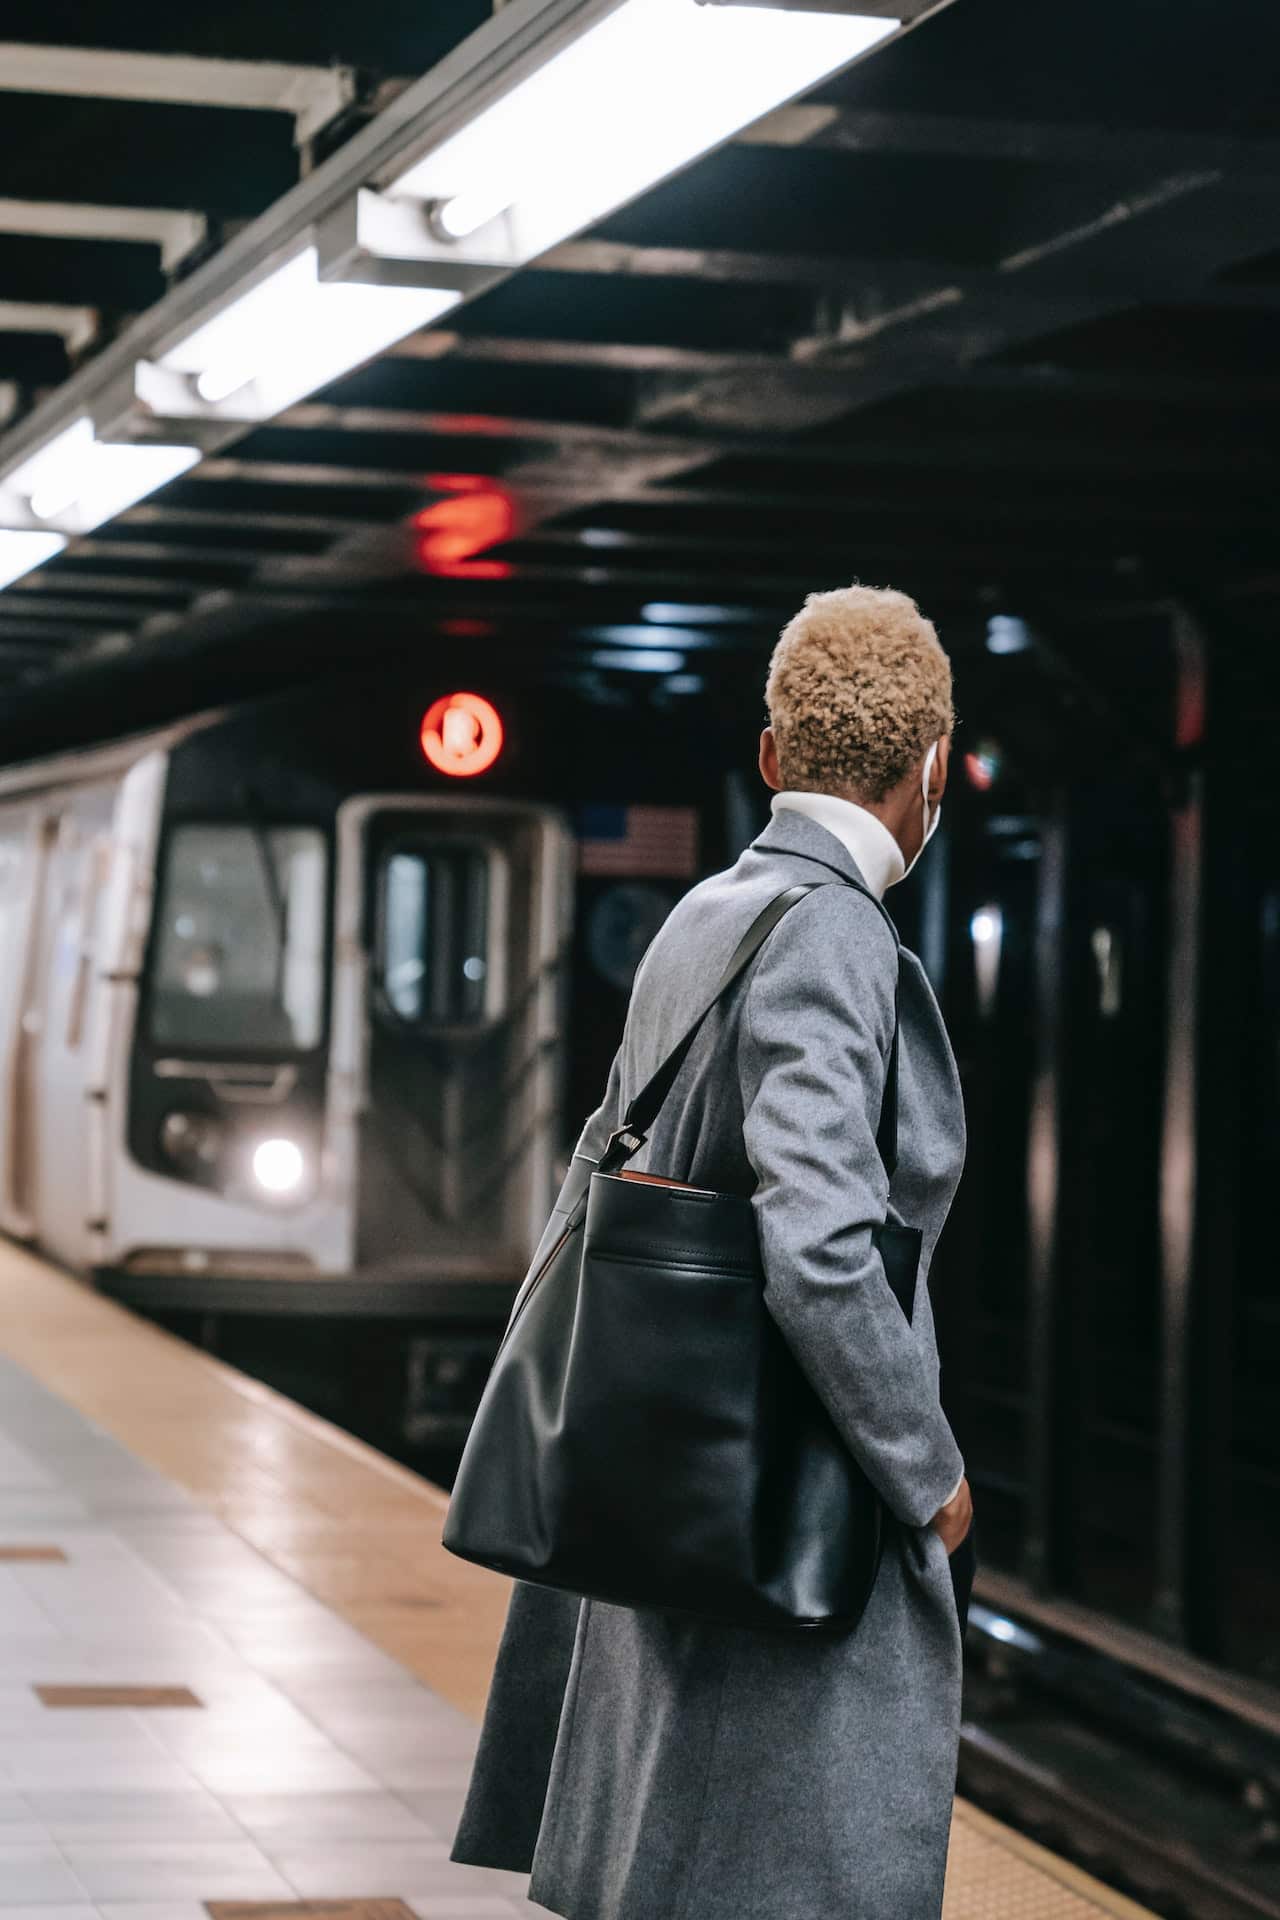 Black woman with short natural hair waits for the subway